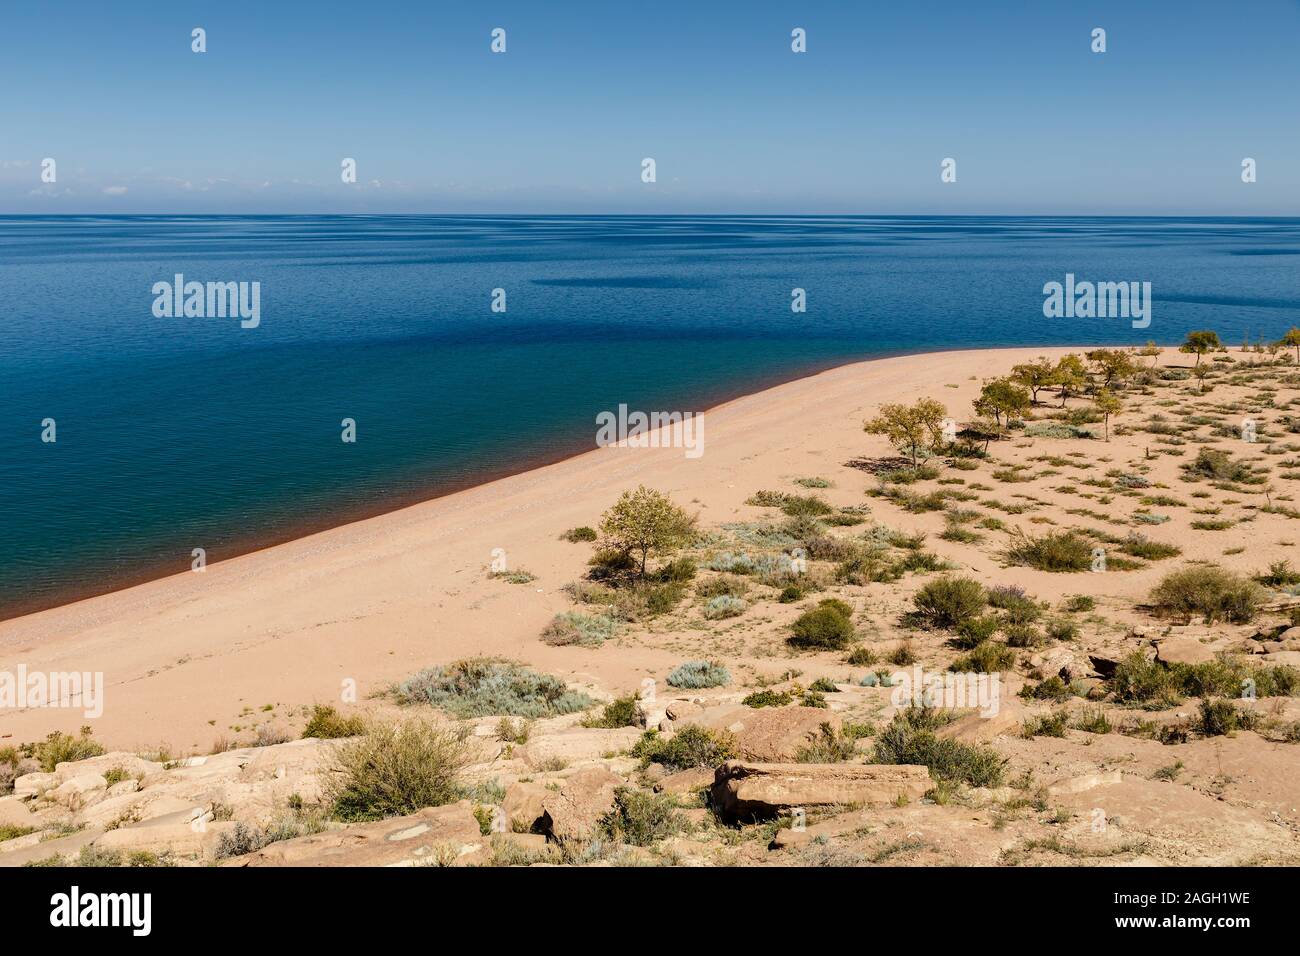 Lake Issyk-kul, empty sandy beach on the southern shore of the lake, Kyrgyzstan Stock Photo